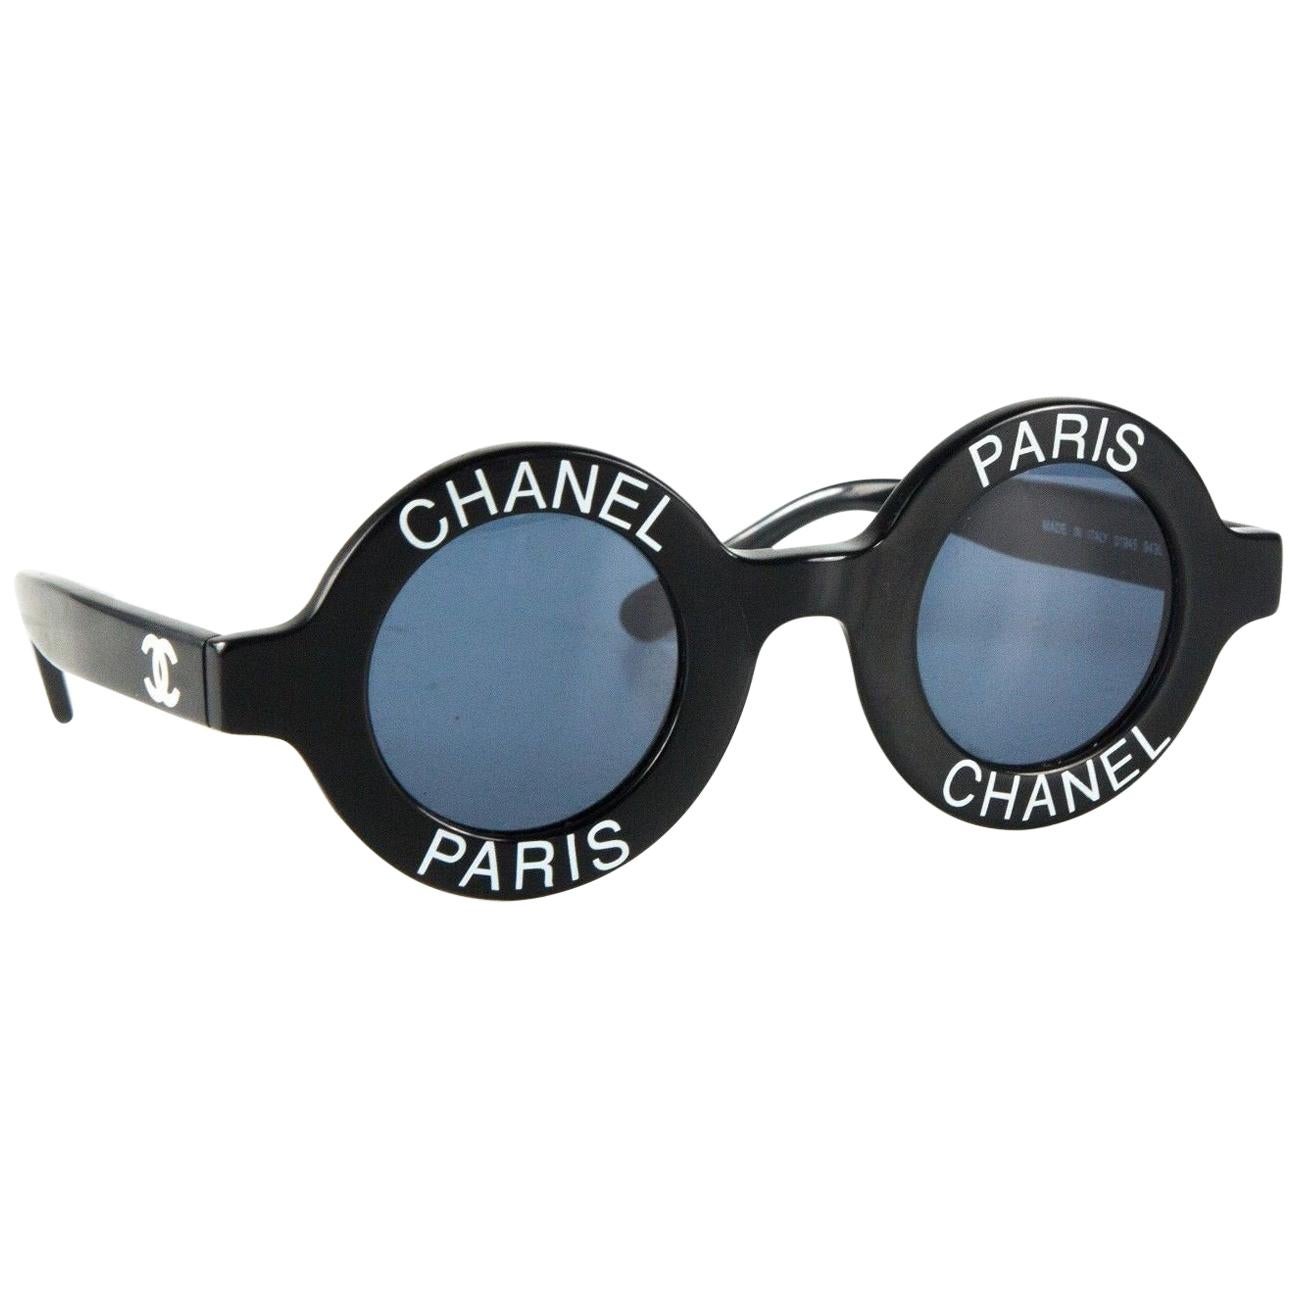 Chanel Sunglasses CC Logos Eye Wear Black Chanel Sunglasses